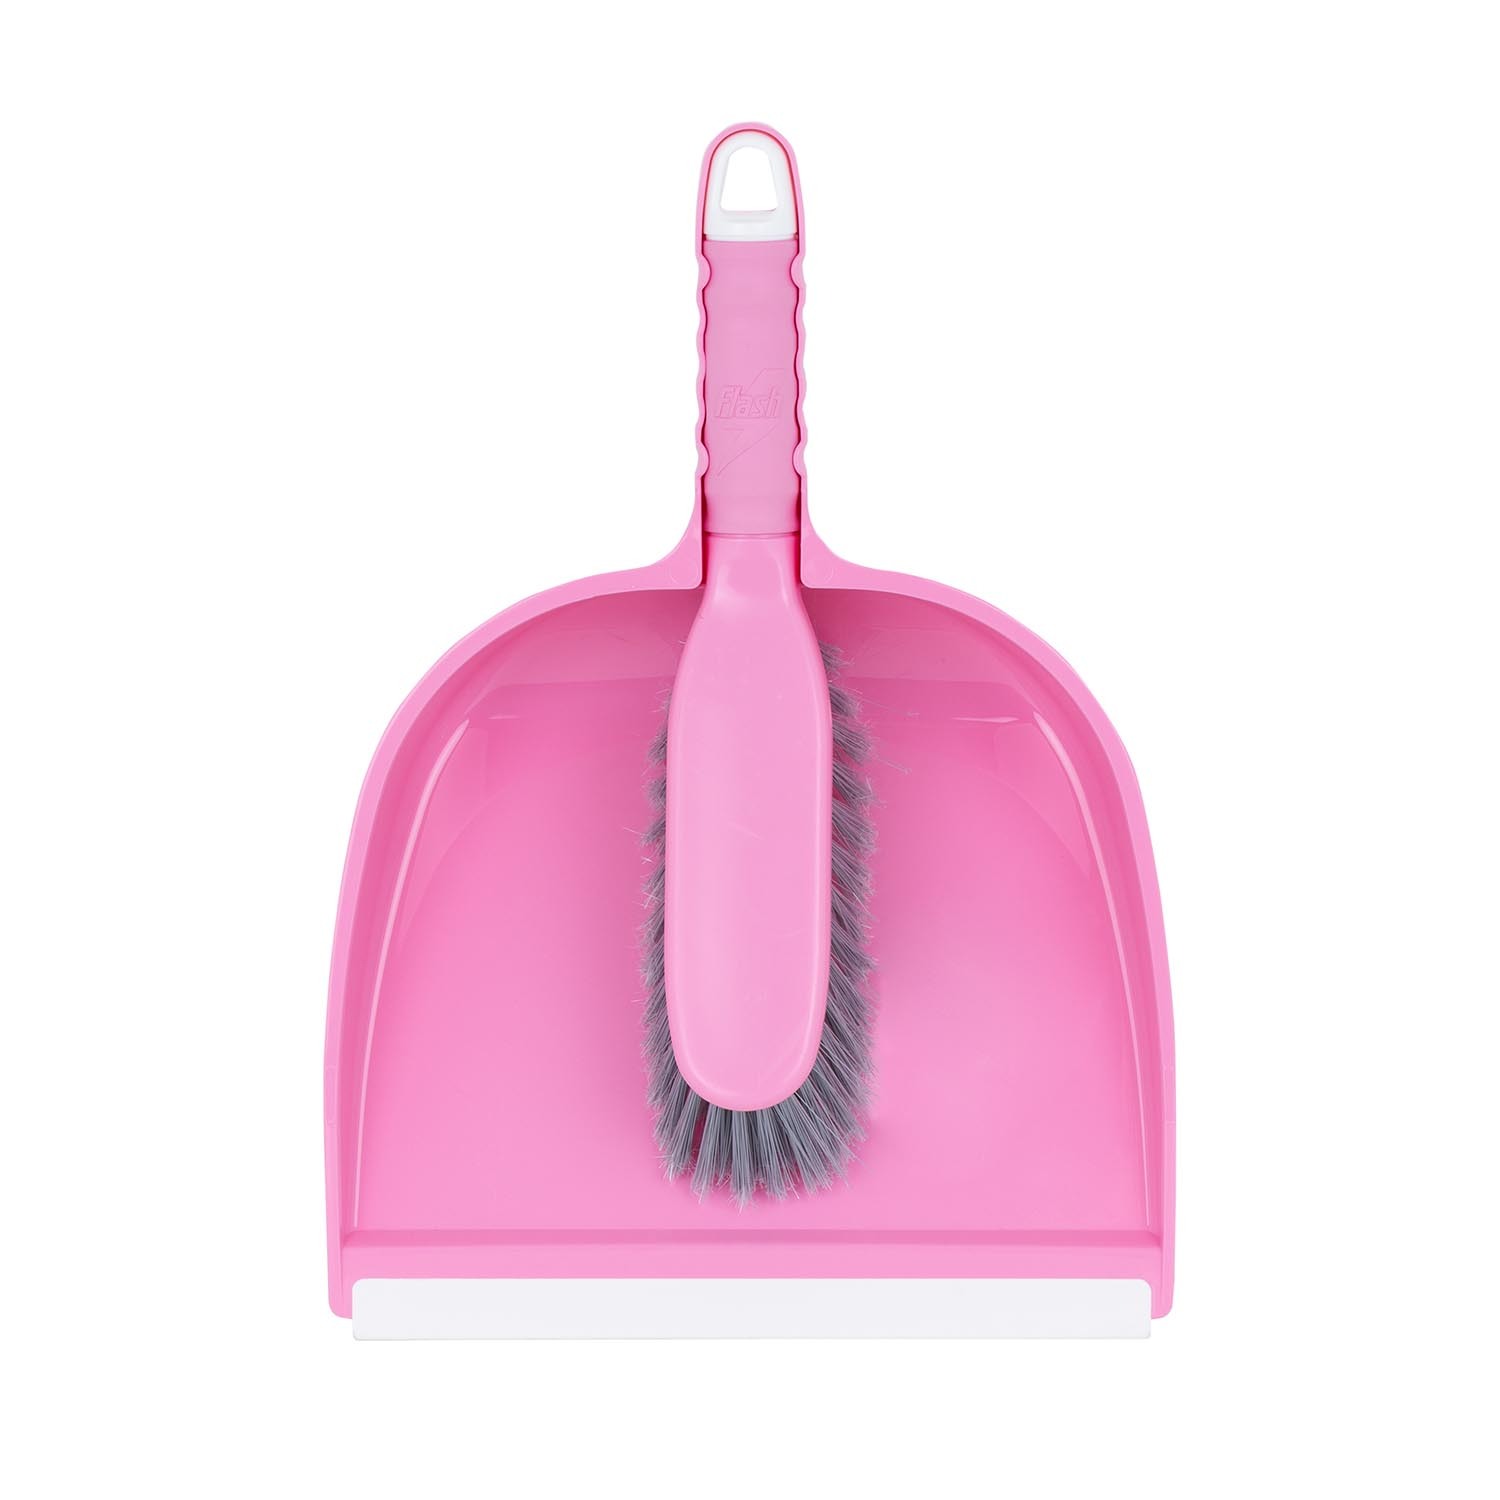 Flash Dustpan and Brush Set - Pink Image 2